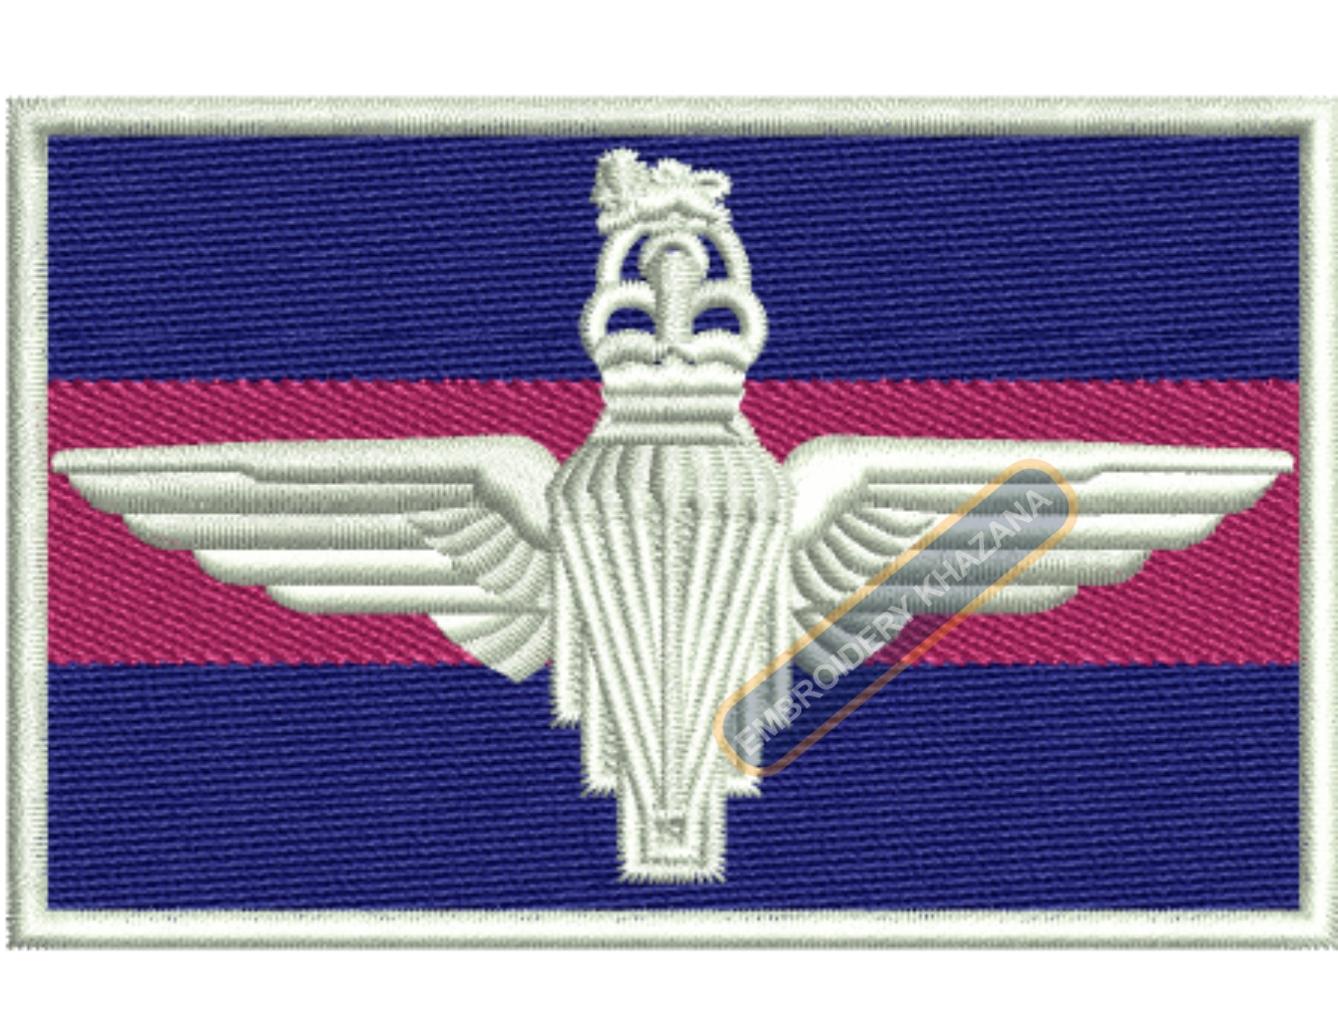 Parachute Regiment badge embroidery design